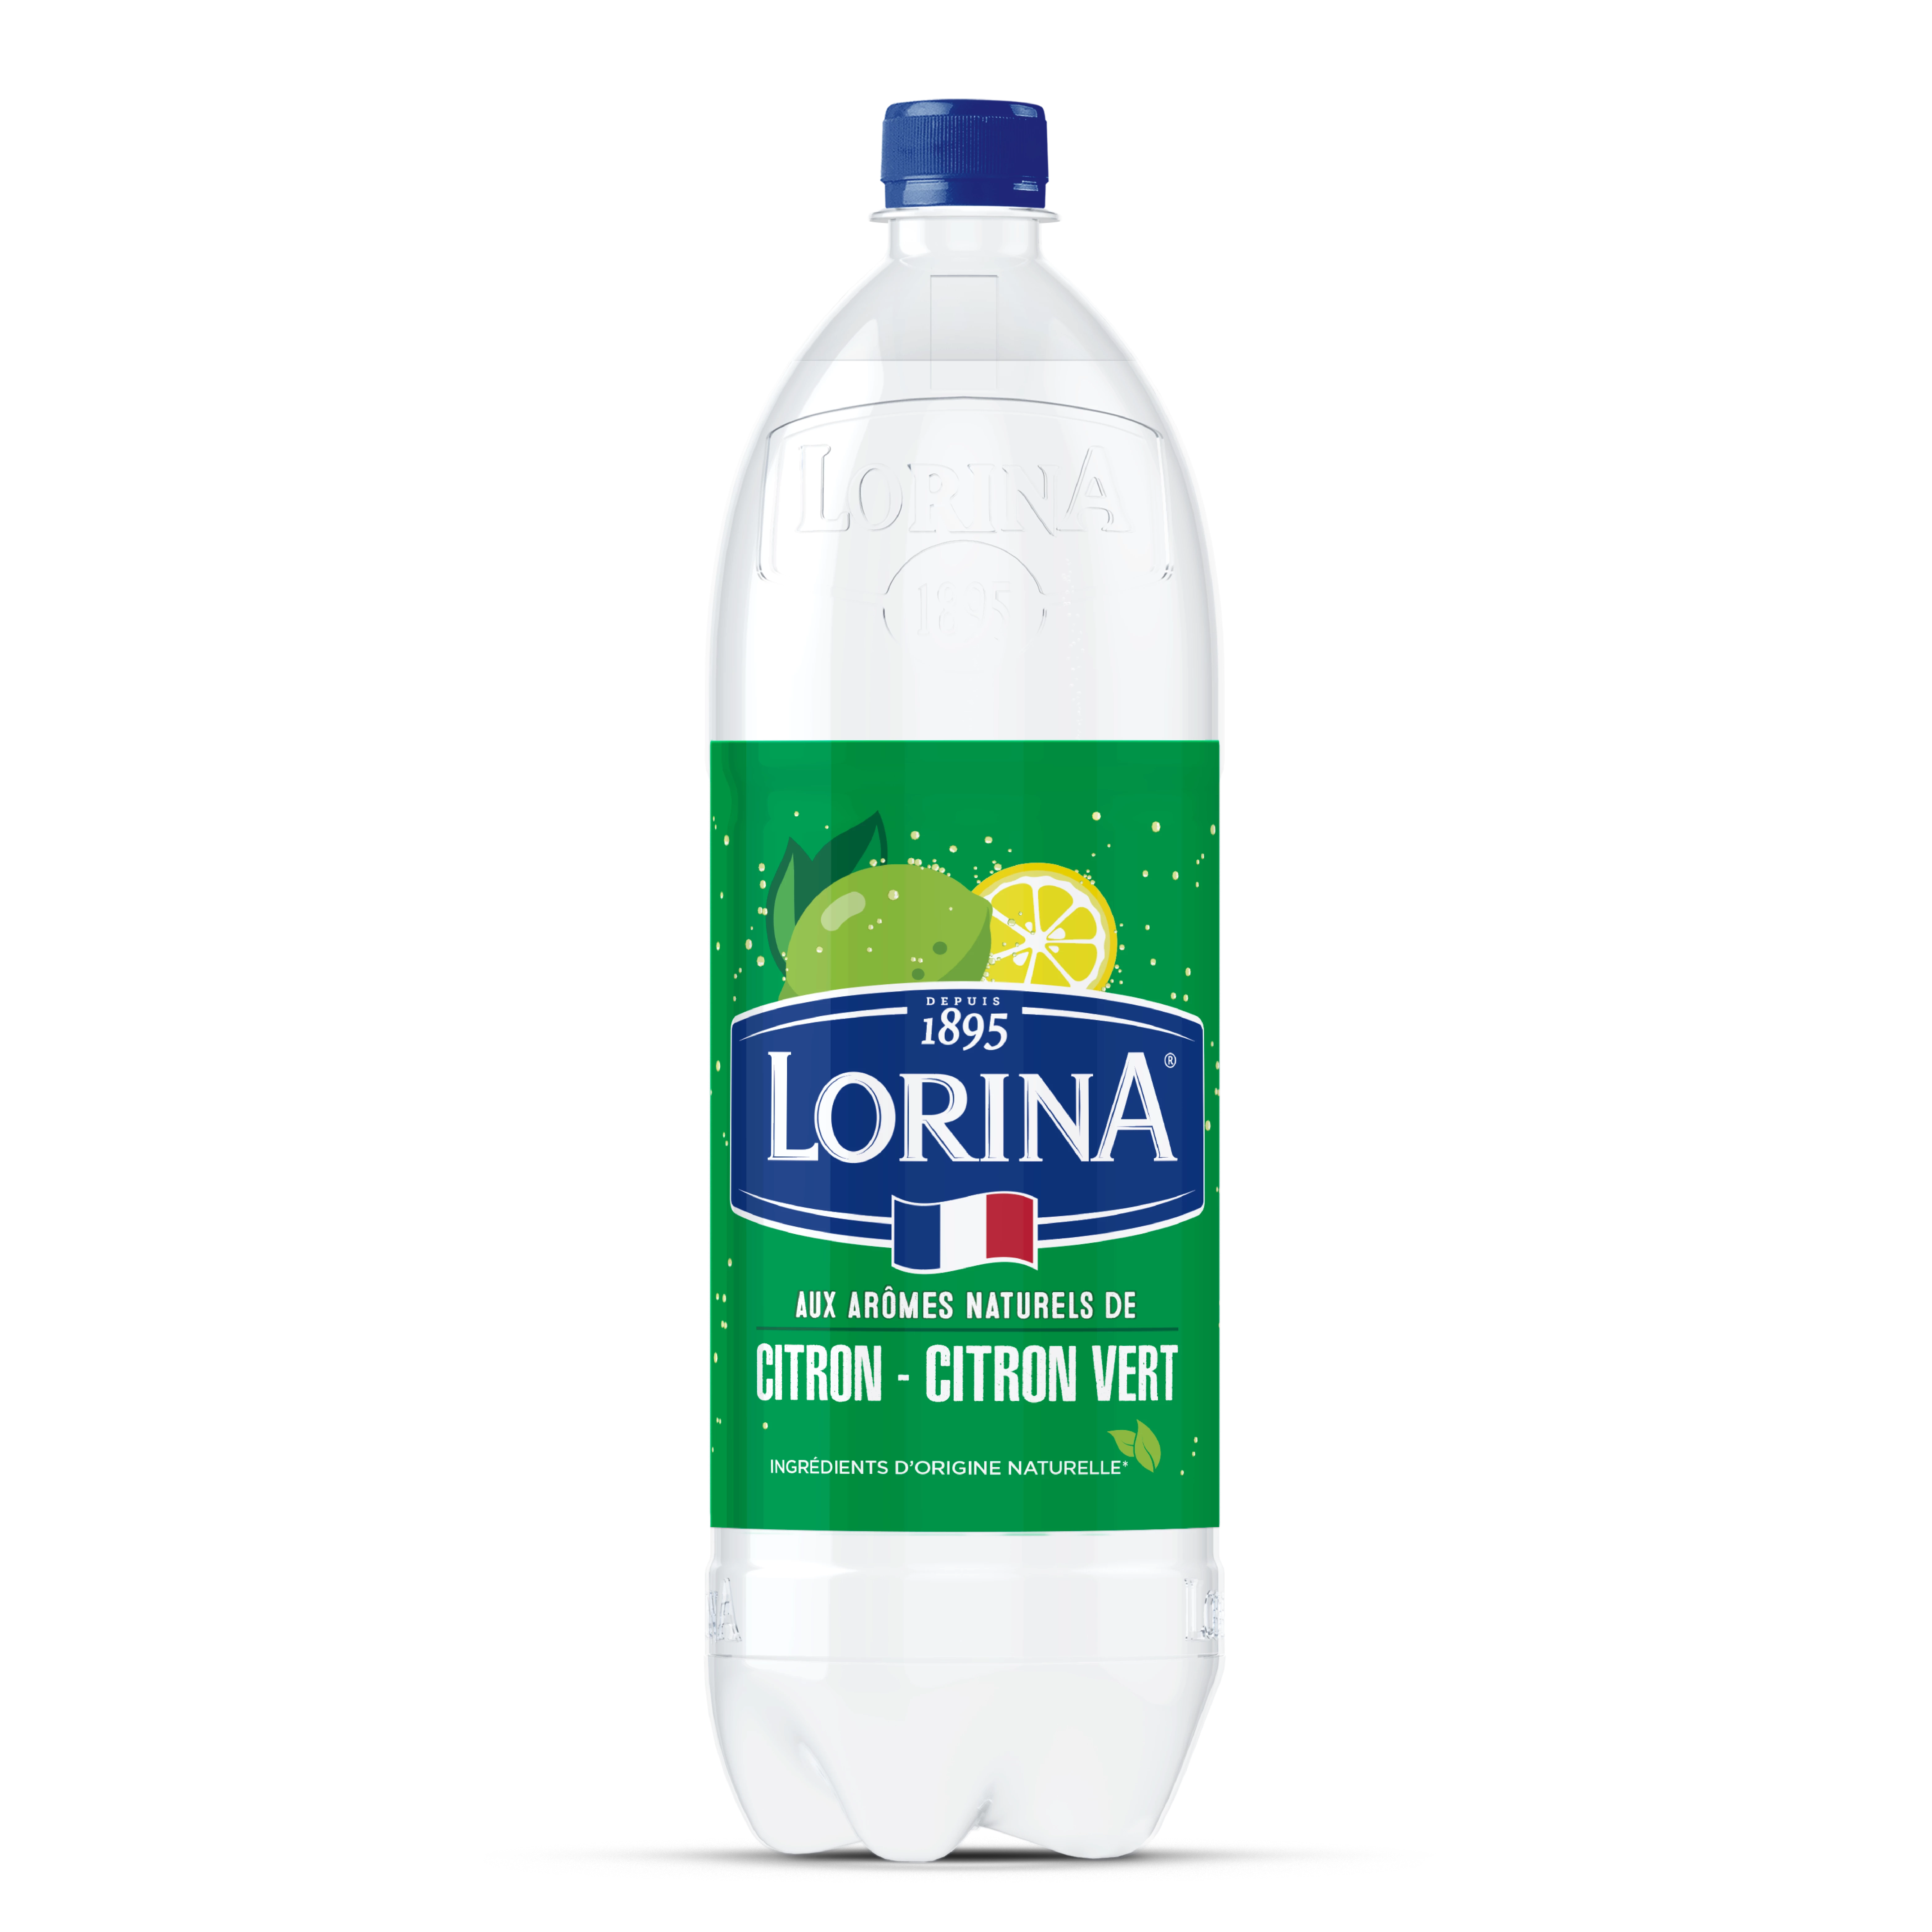 Lorina Limette Cit Vert Pet 1 25l